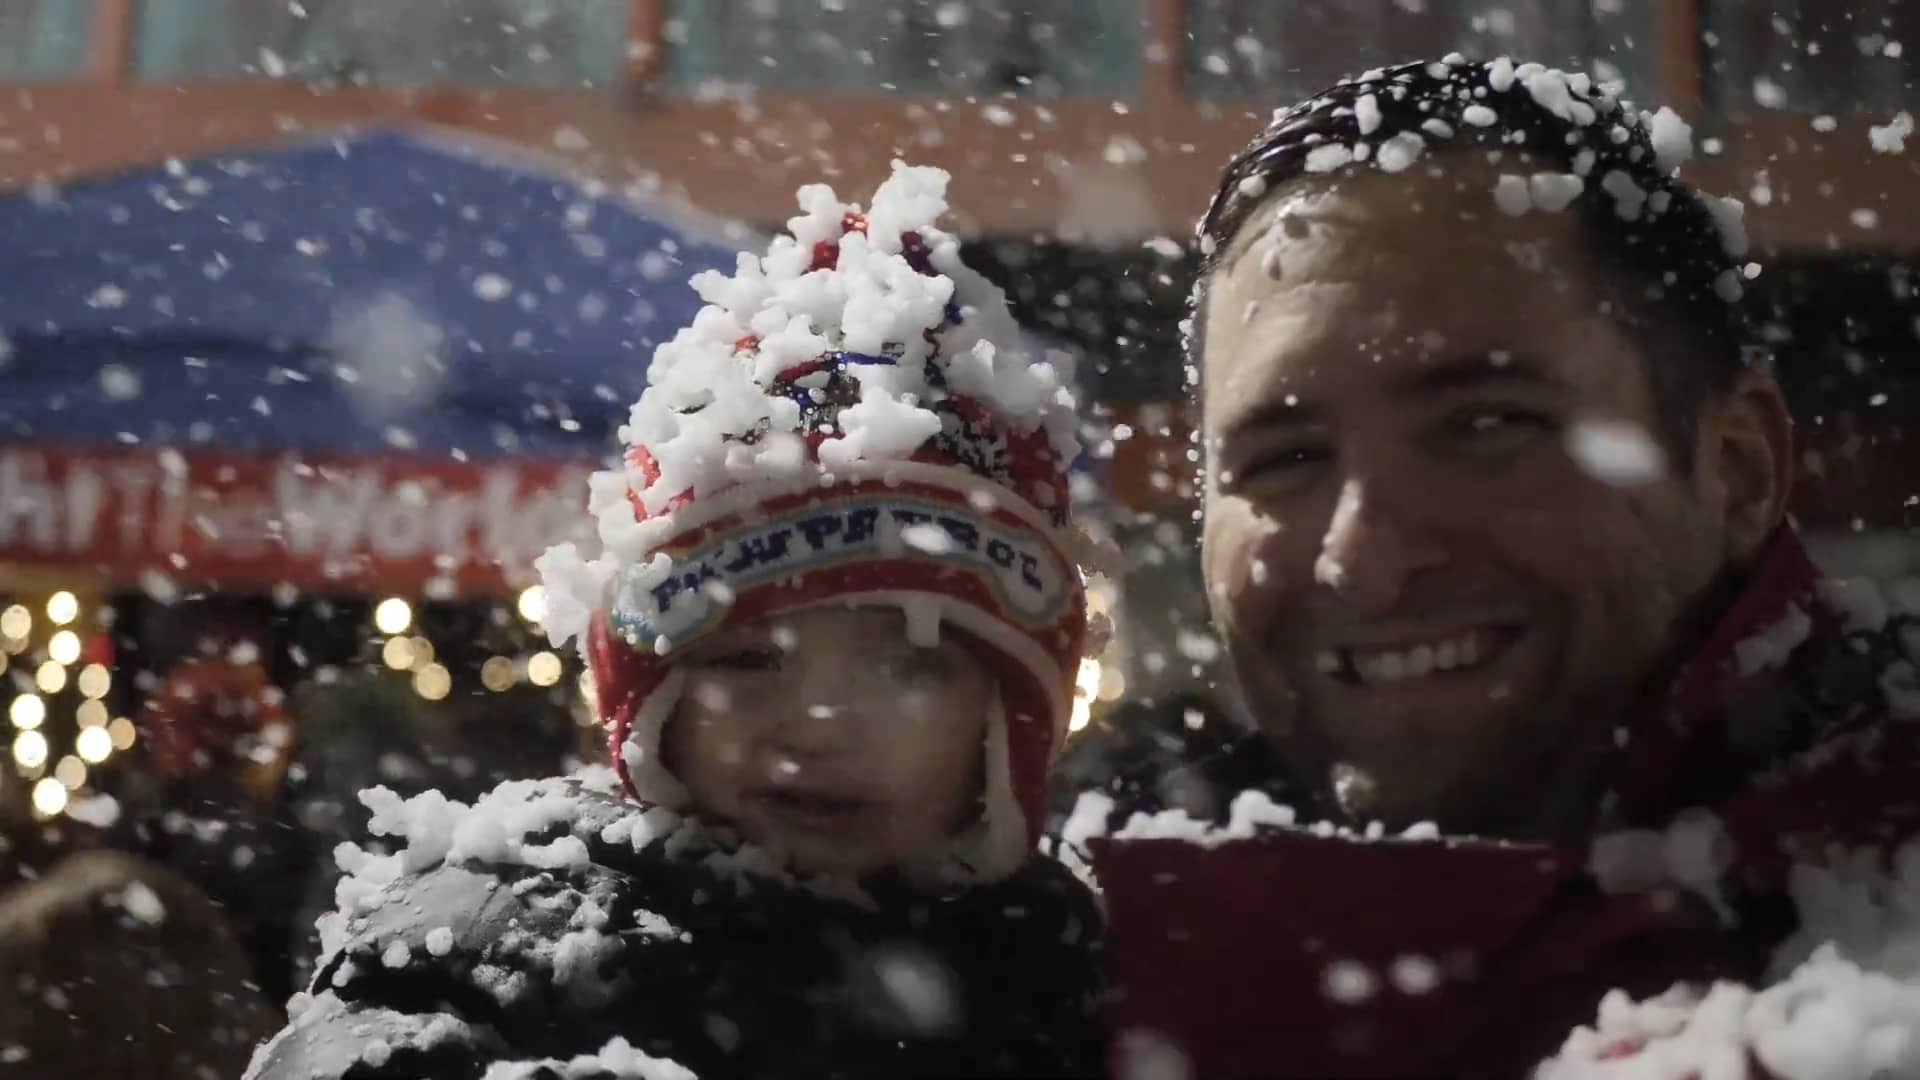 Fallon Christmas Tree Lighting Video Dec 7th 2018 5min 38secs on Vimeo